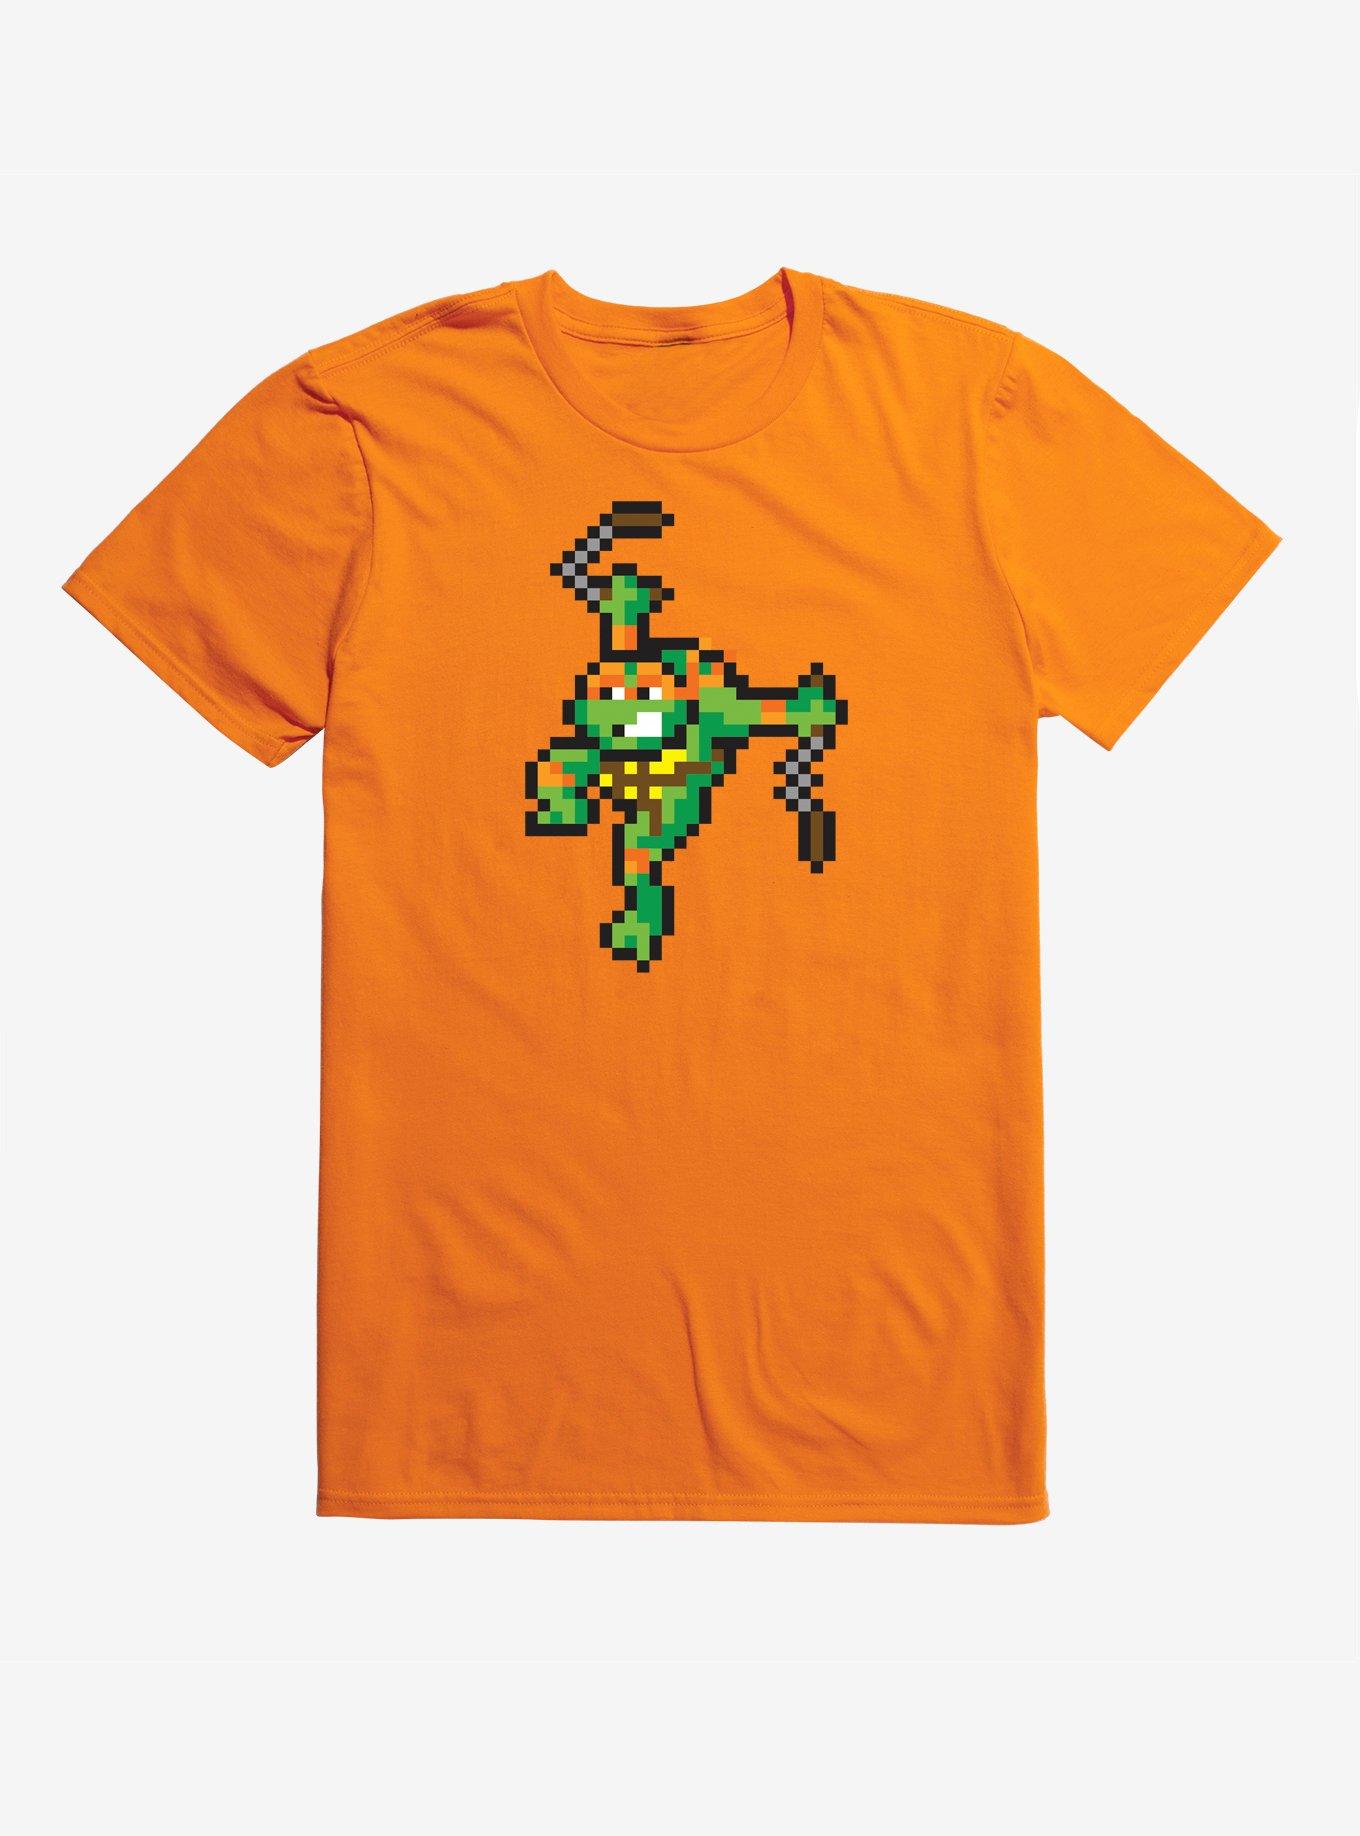 Teenage Mutant Ninja Turtles Pixel Art Michelangelo Fight T-Shirt, ORANGE, hi-res